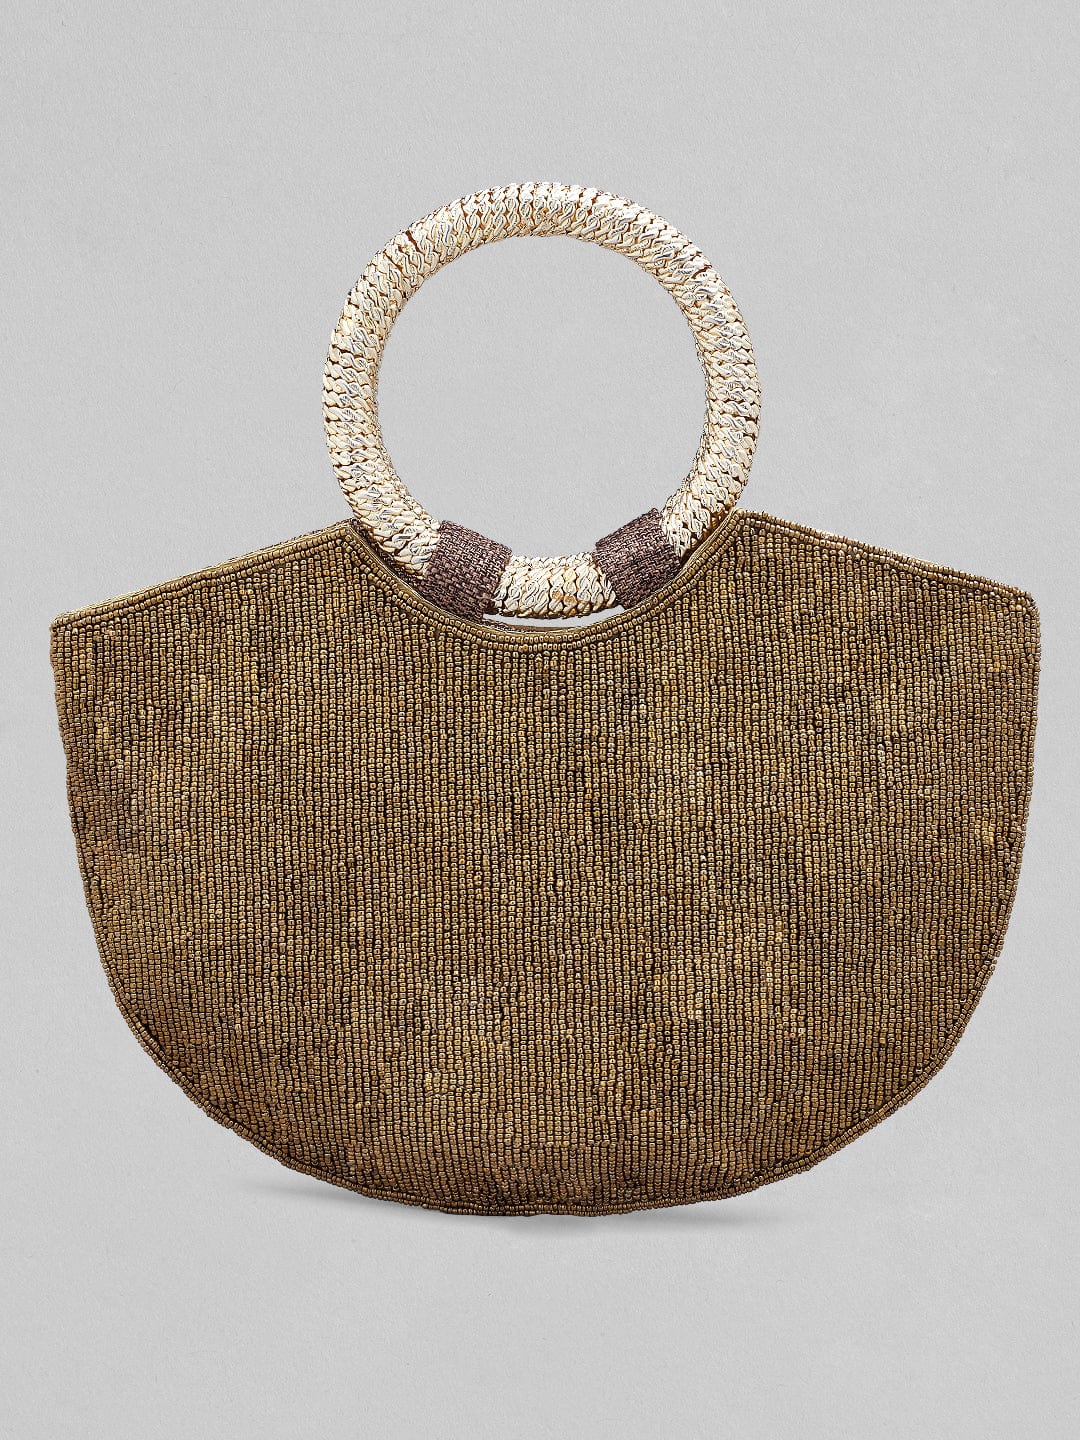 Rubans Brown Coloured Handbag With Studded Stone And Embroidery